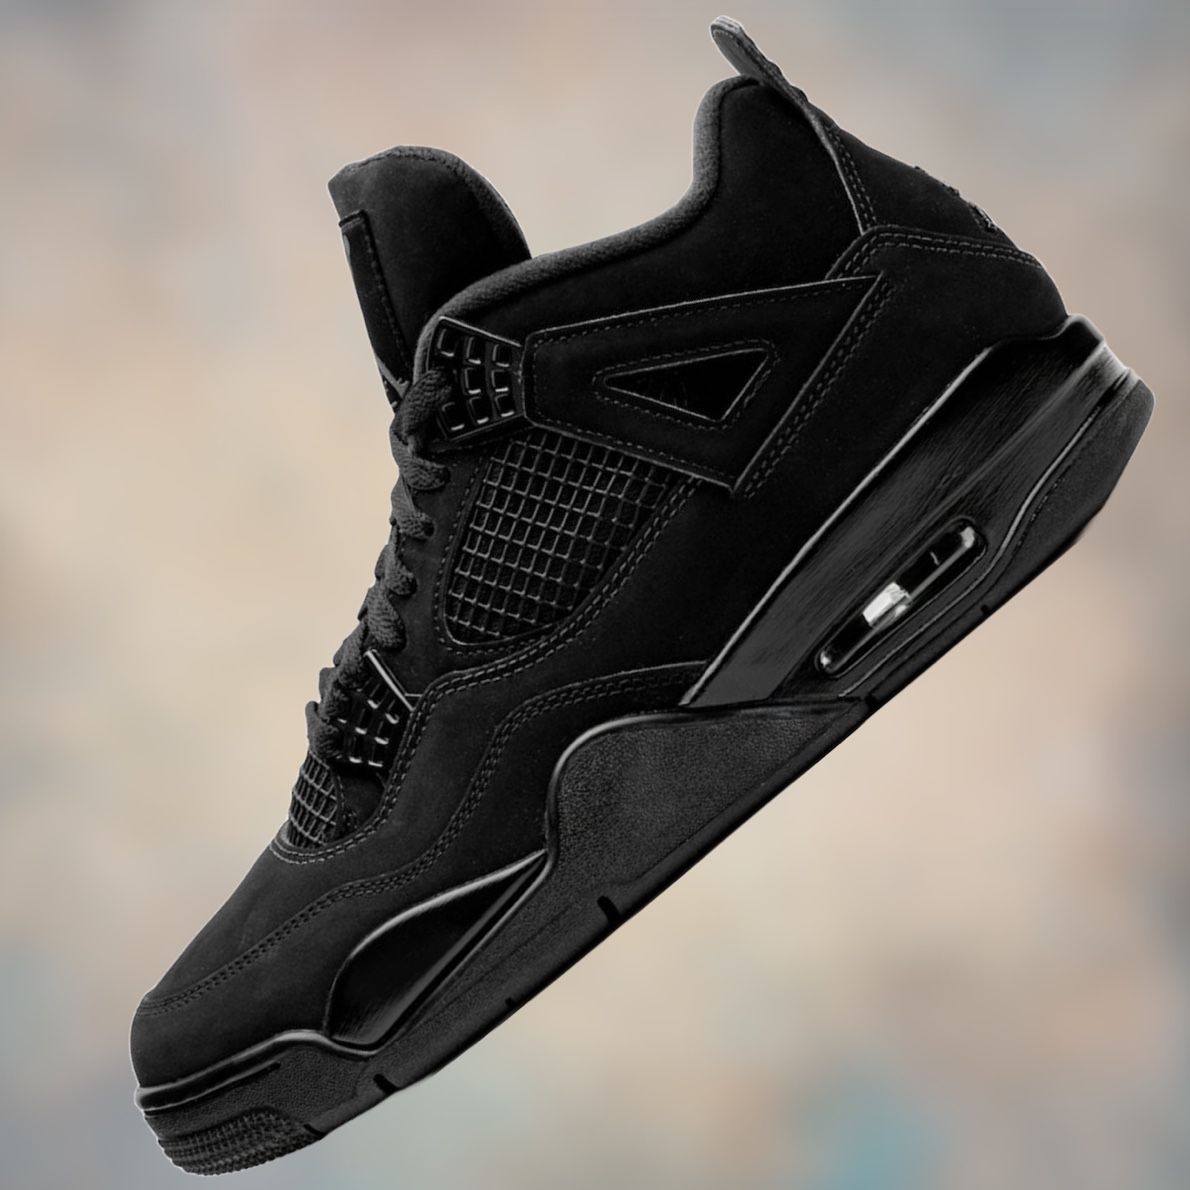 Jordan 4 Retro ‘Black Cat’ (DM With Your Size)